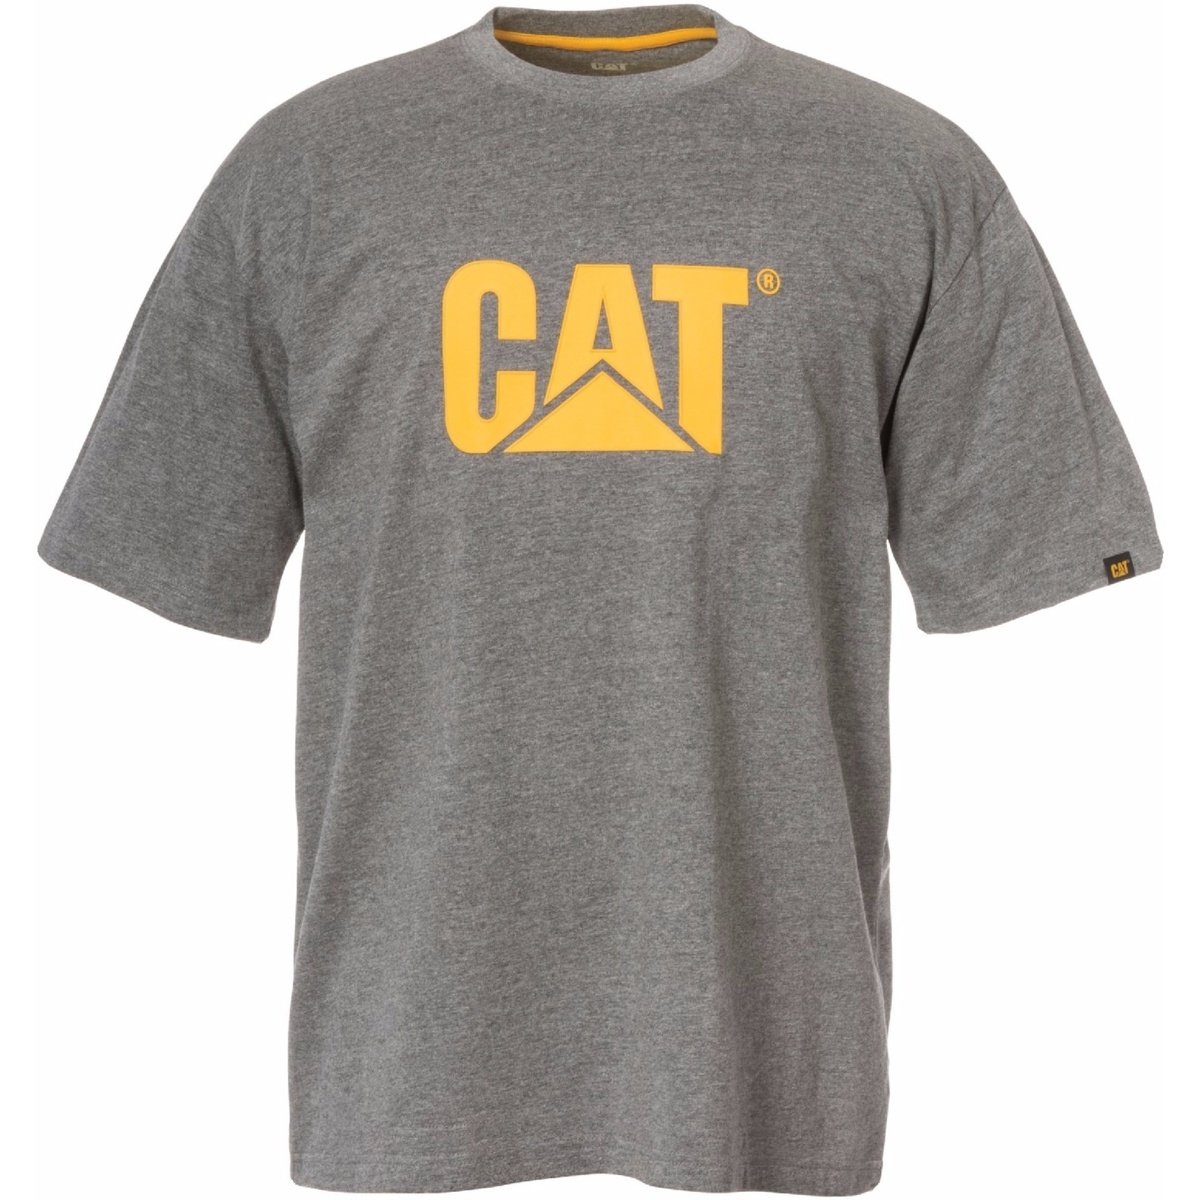 Vêtements Homme T-shirts manches courtes Caterpillar Trademark Gris